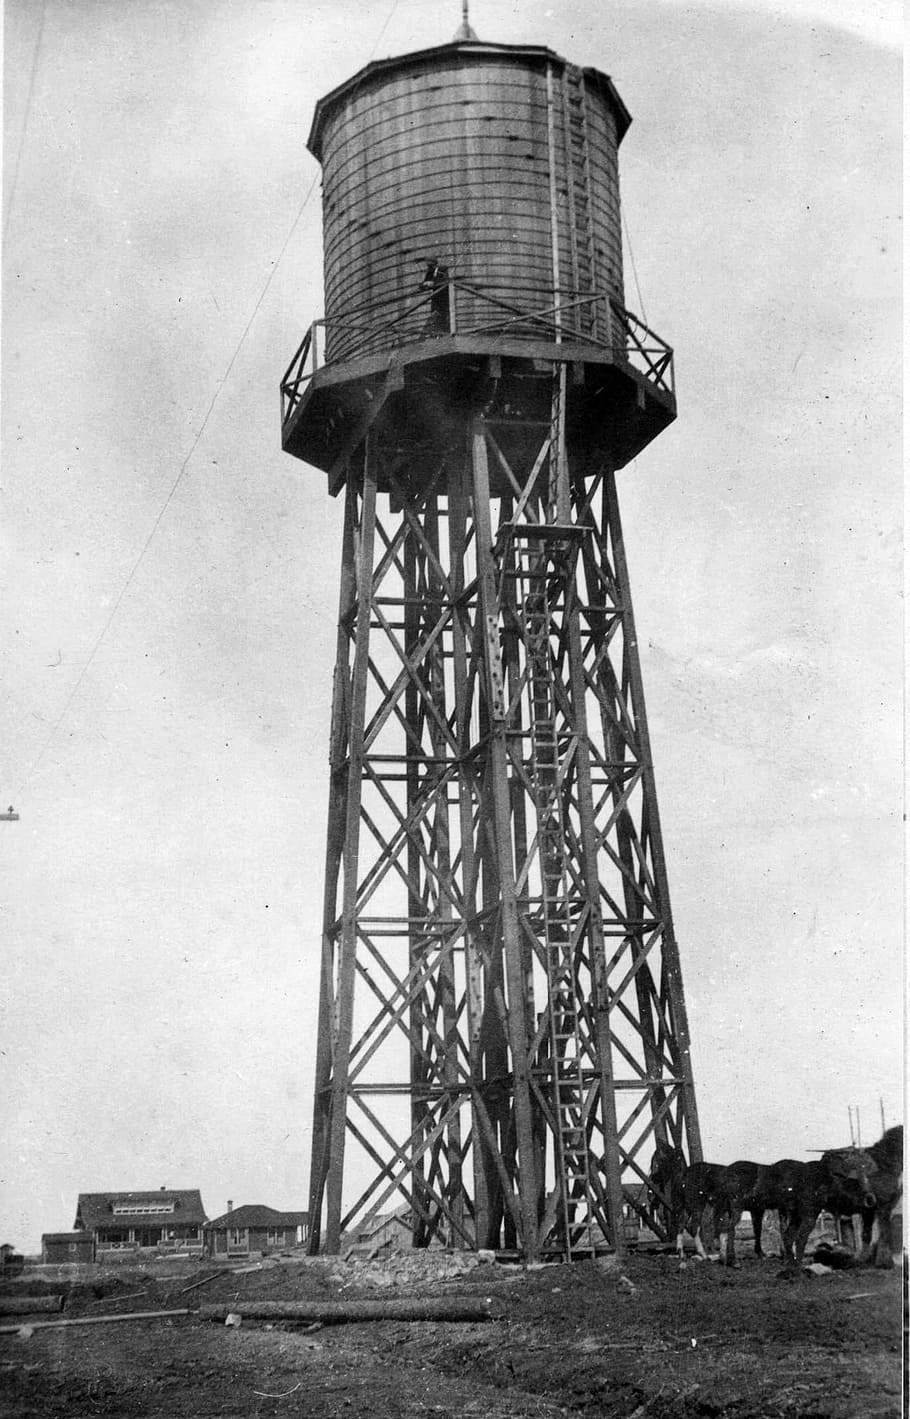 newdale id water tower, NewDale ID, Water Tower, Idaho, newdale, public domain, vintage, black And White, old, antique